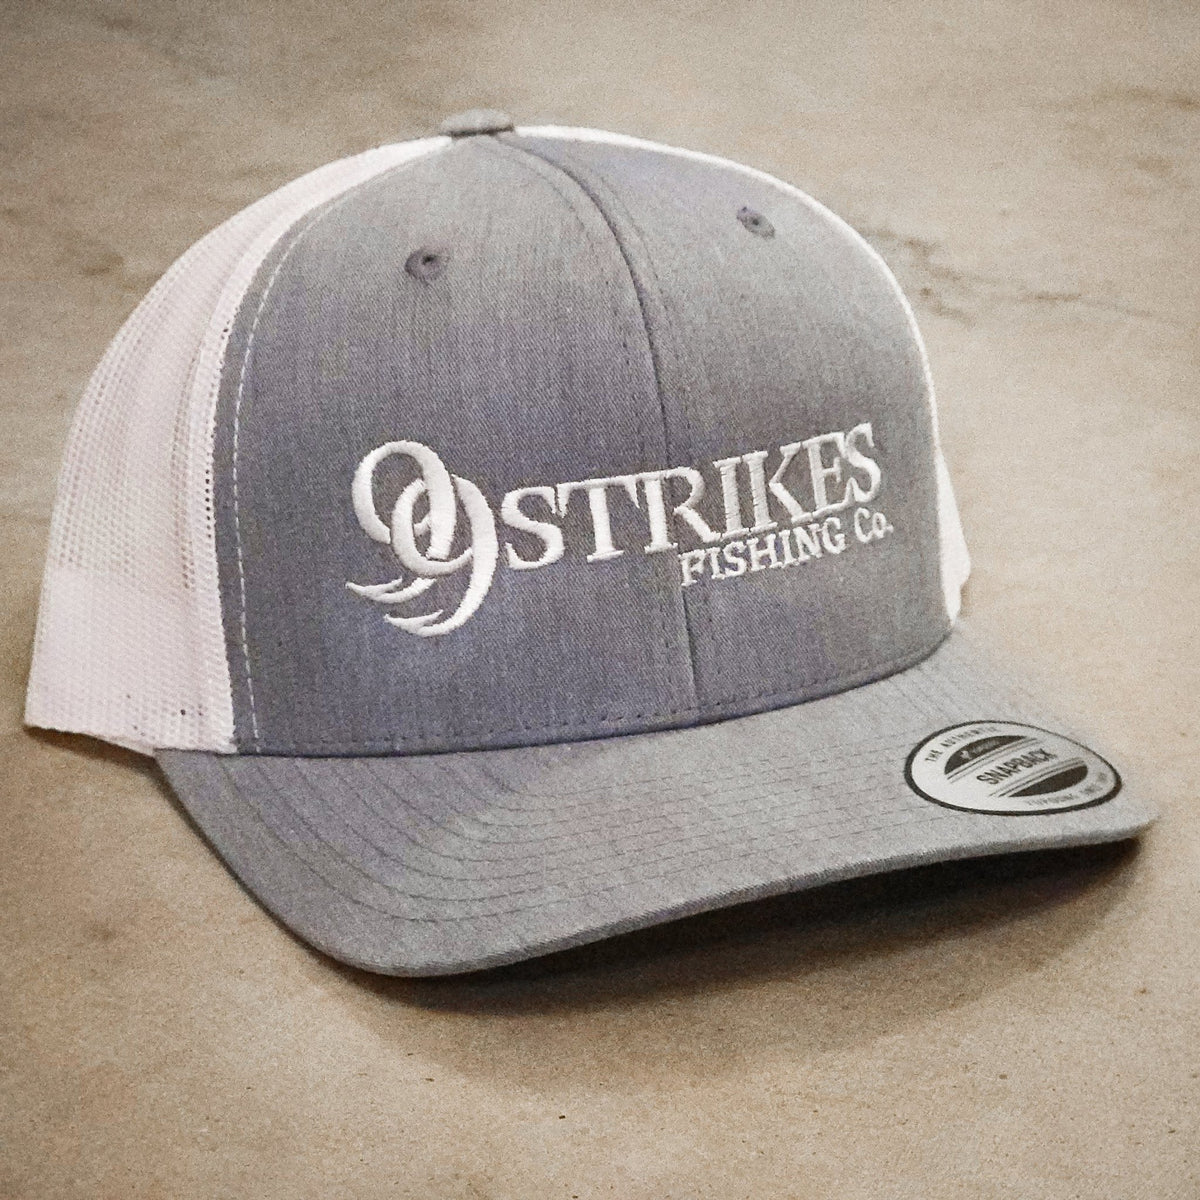 99 Strikes Gray/White Snapback Hat - 99 Strikes Fishing Co